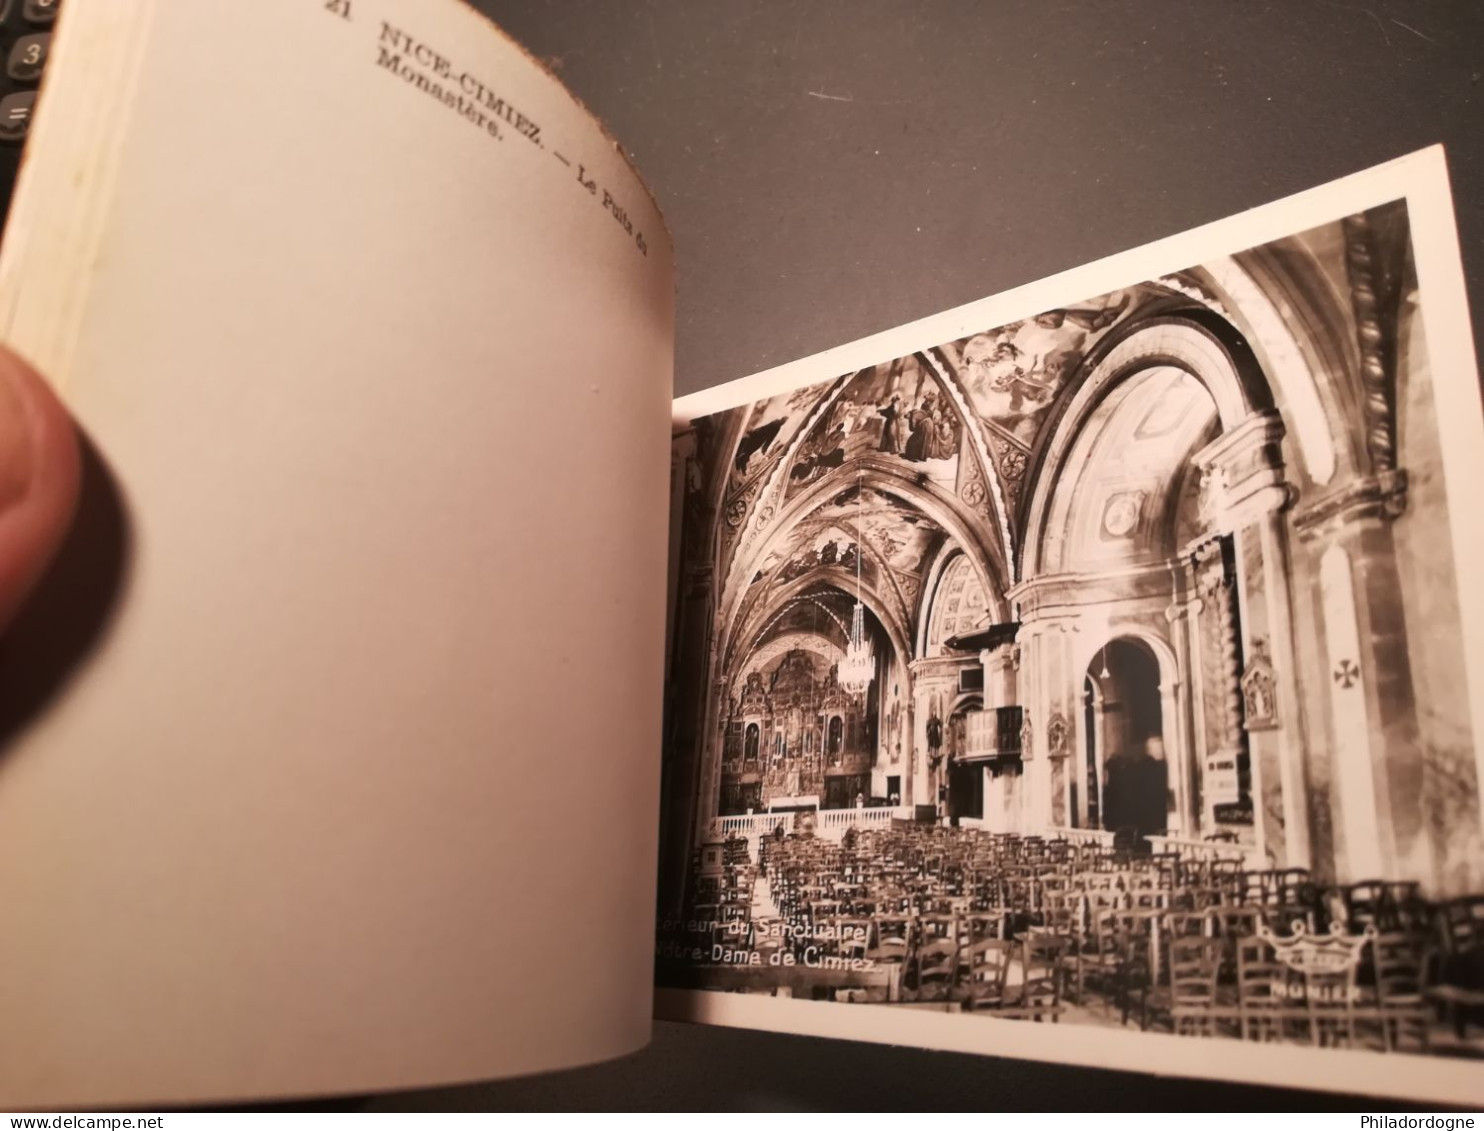 CPA Boite Carnets - (06) Monastère De Cimiez Nice - 10 Photographies - Edition D'art Munier - Konvolute, Lots, Sammlungen